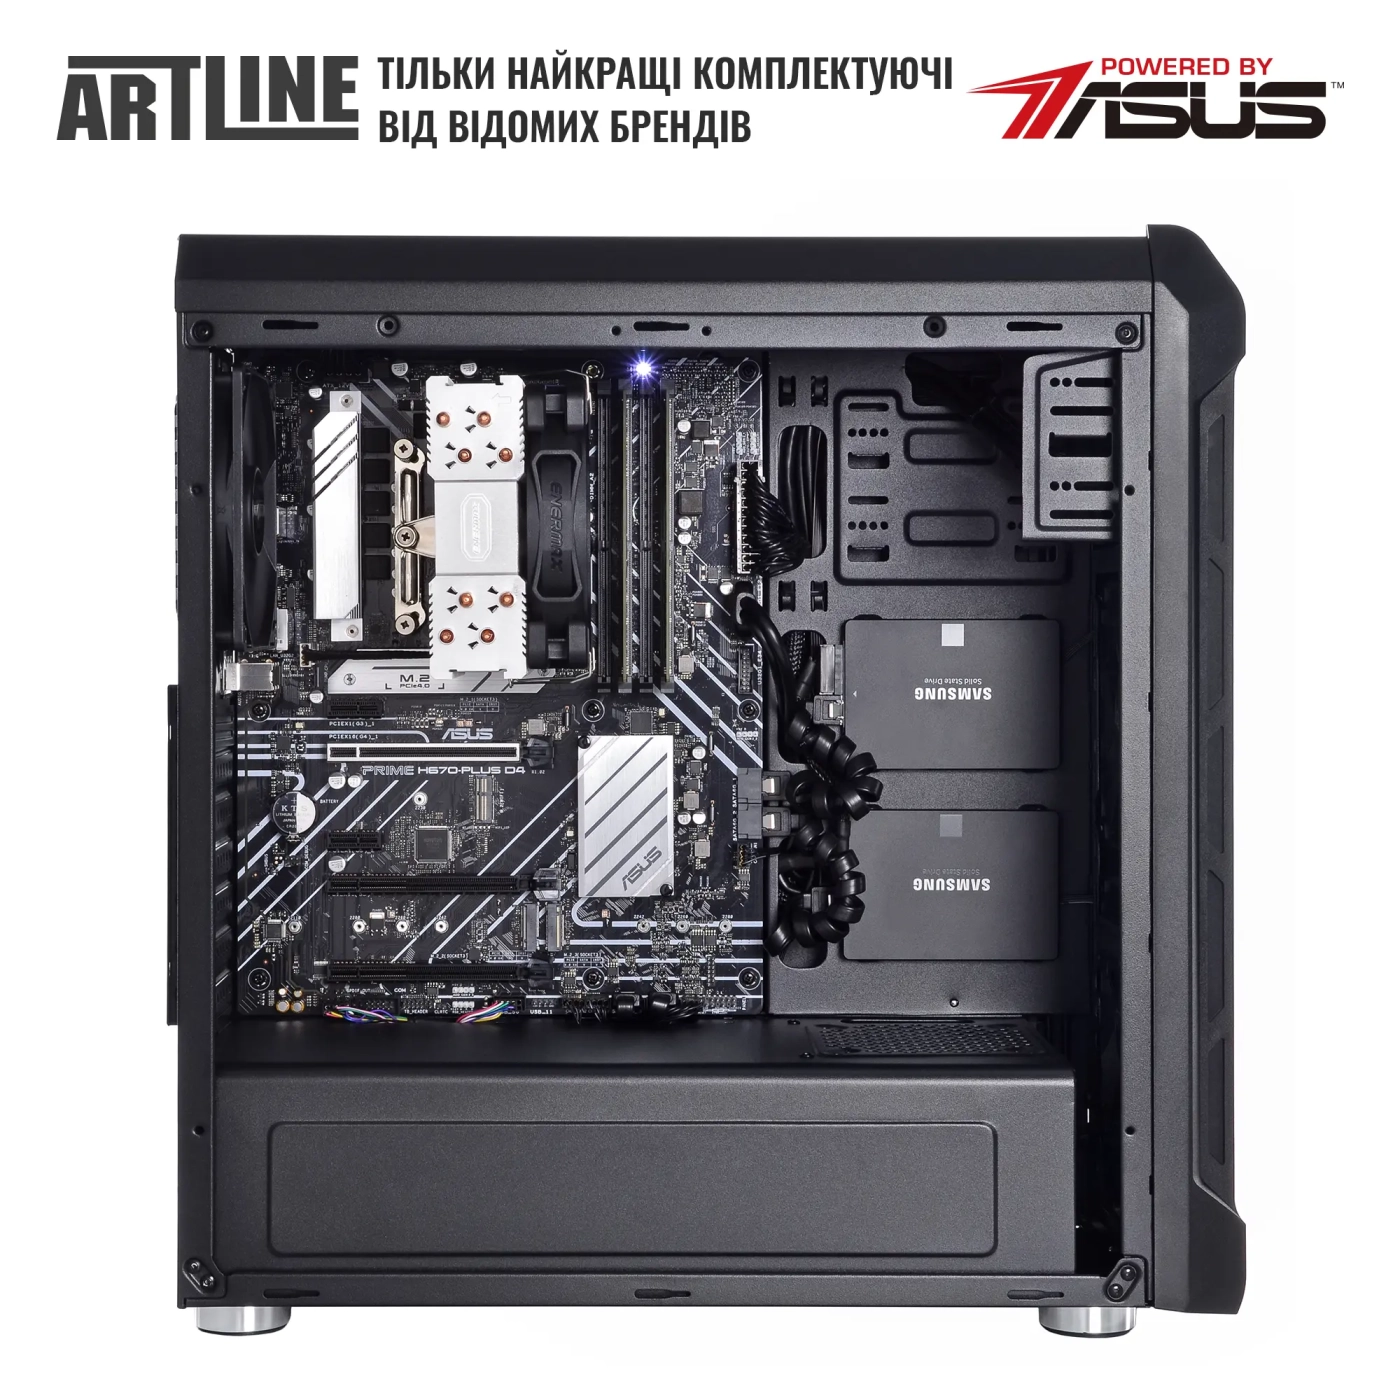 Купити Сервер ARTLINE Business T25 (T25v41) - фото 4